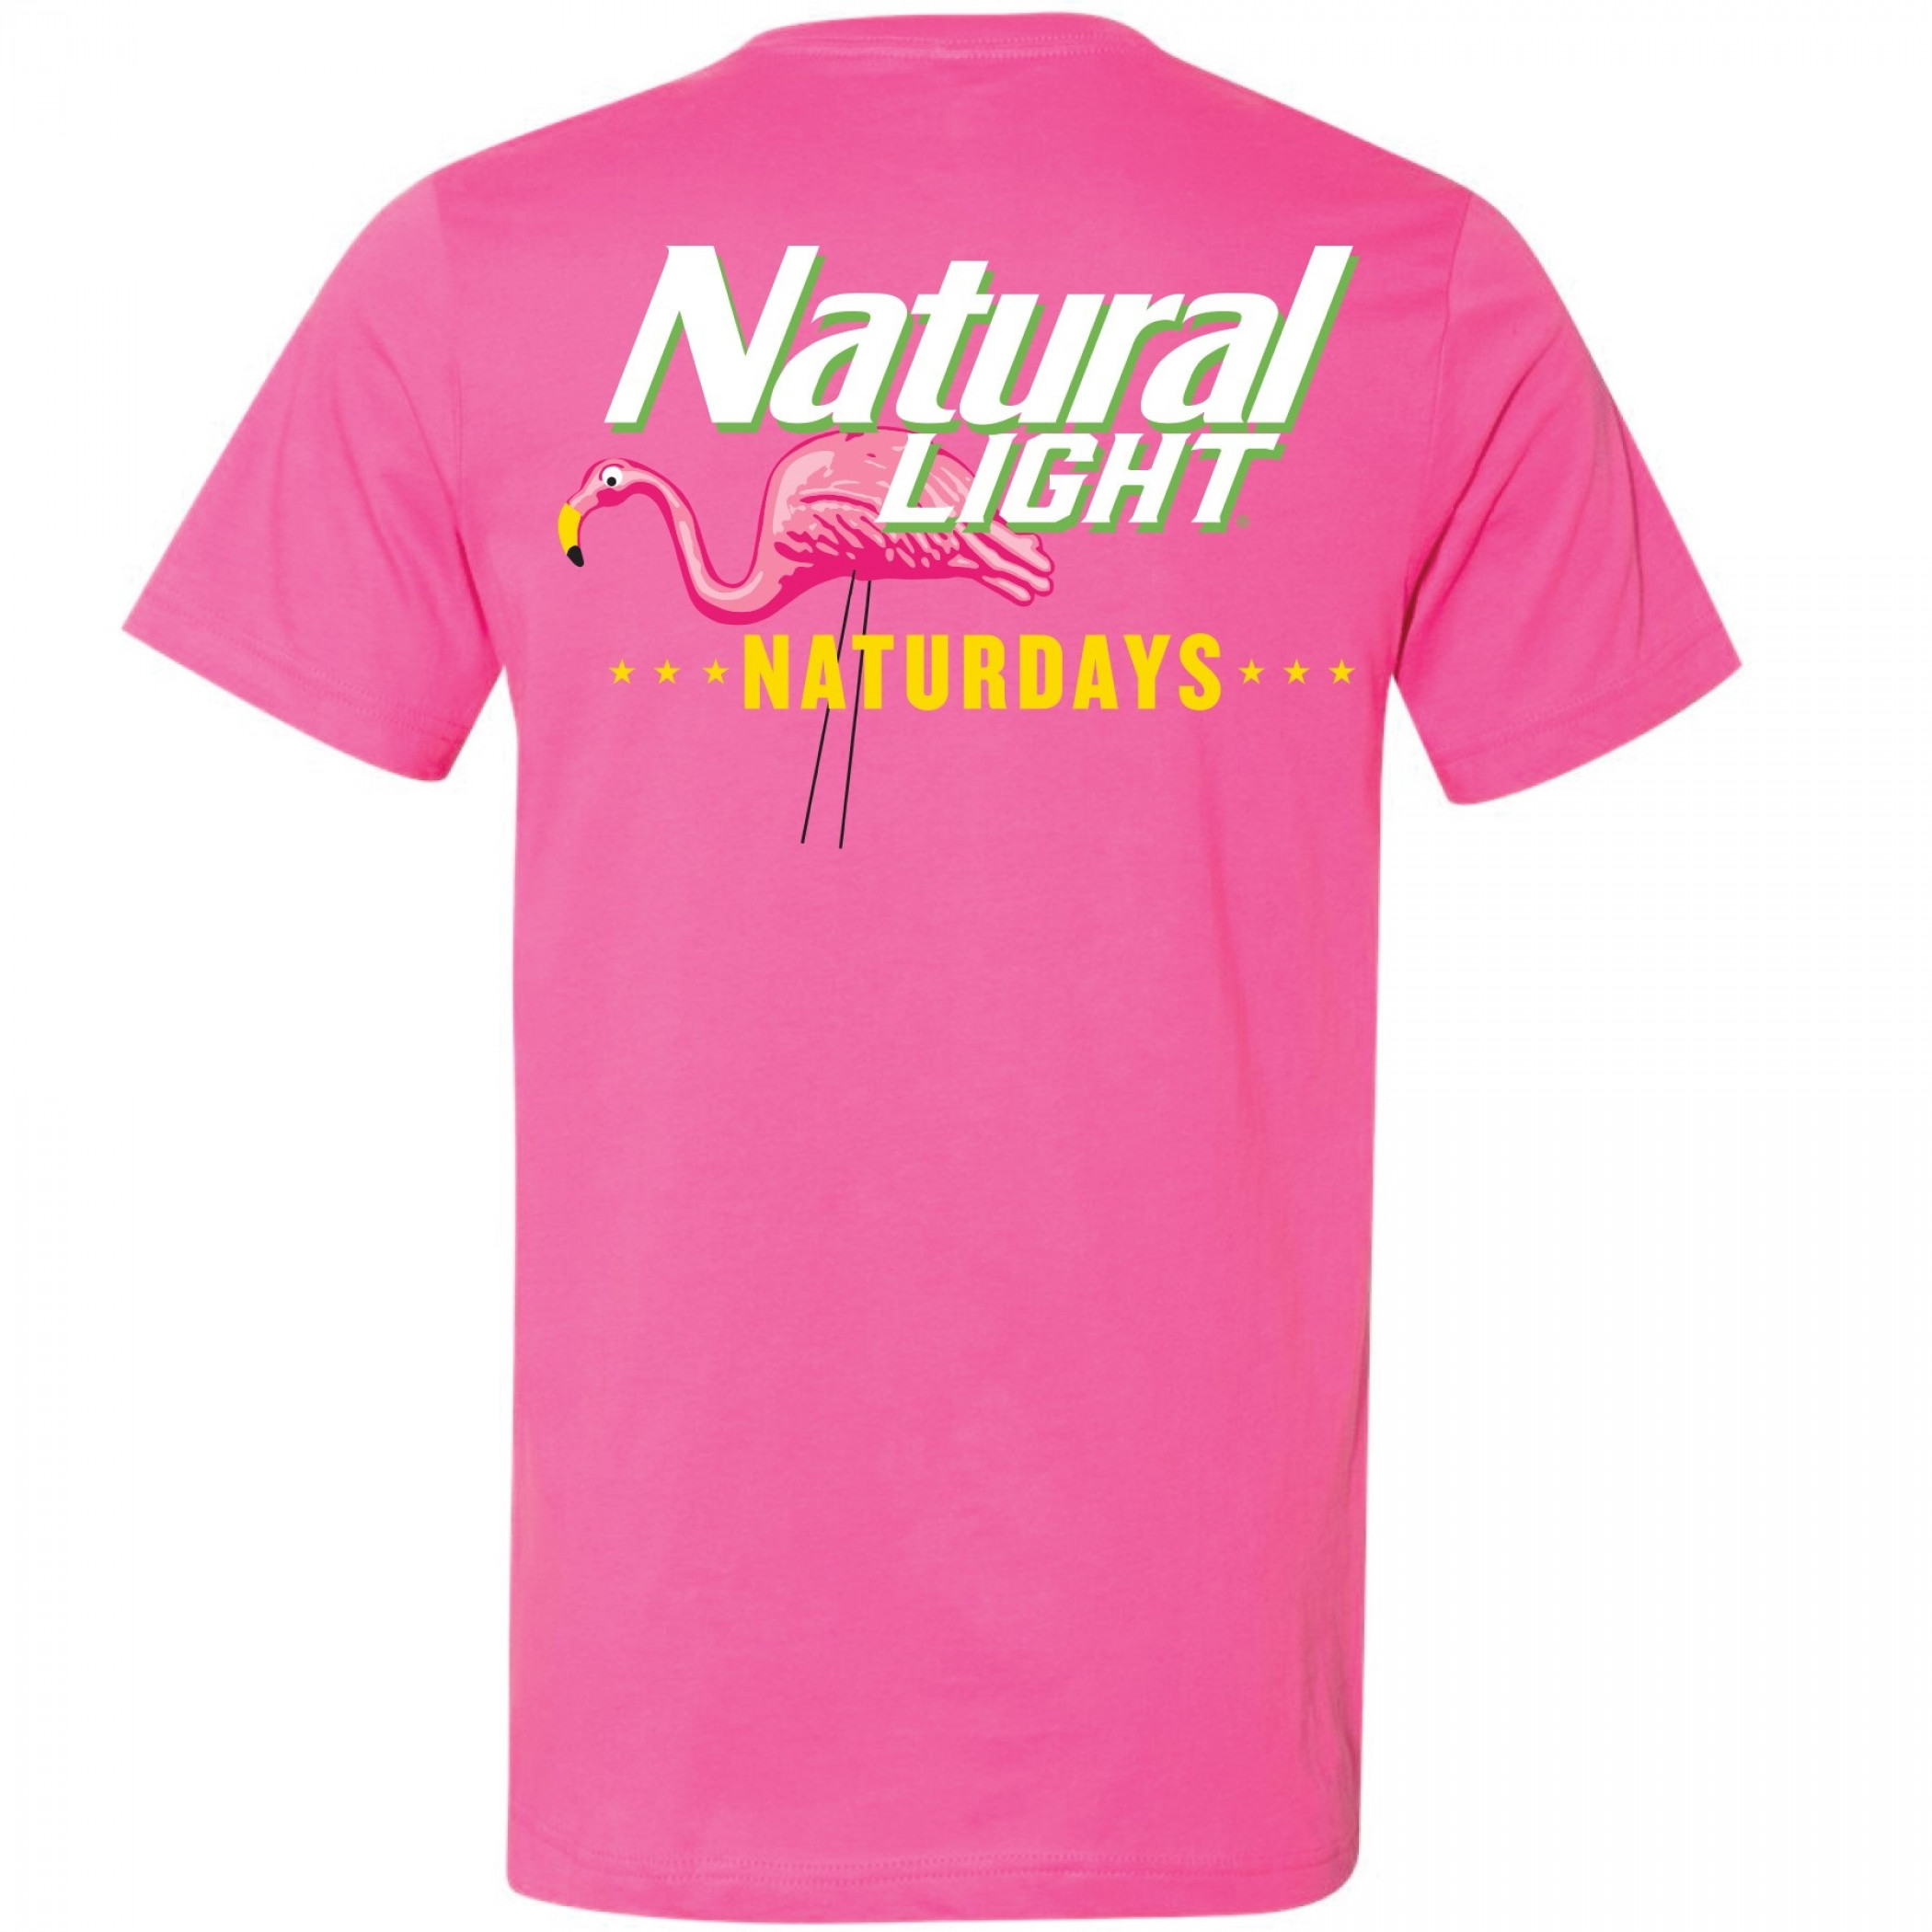 Natural Light Naturdays Pineapple Pink Colorway T-Shirt